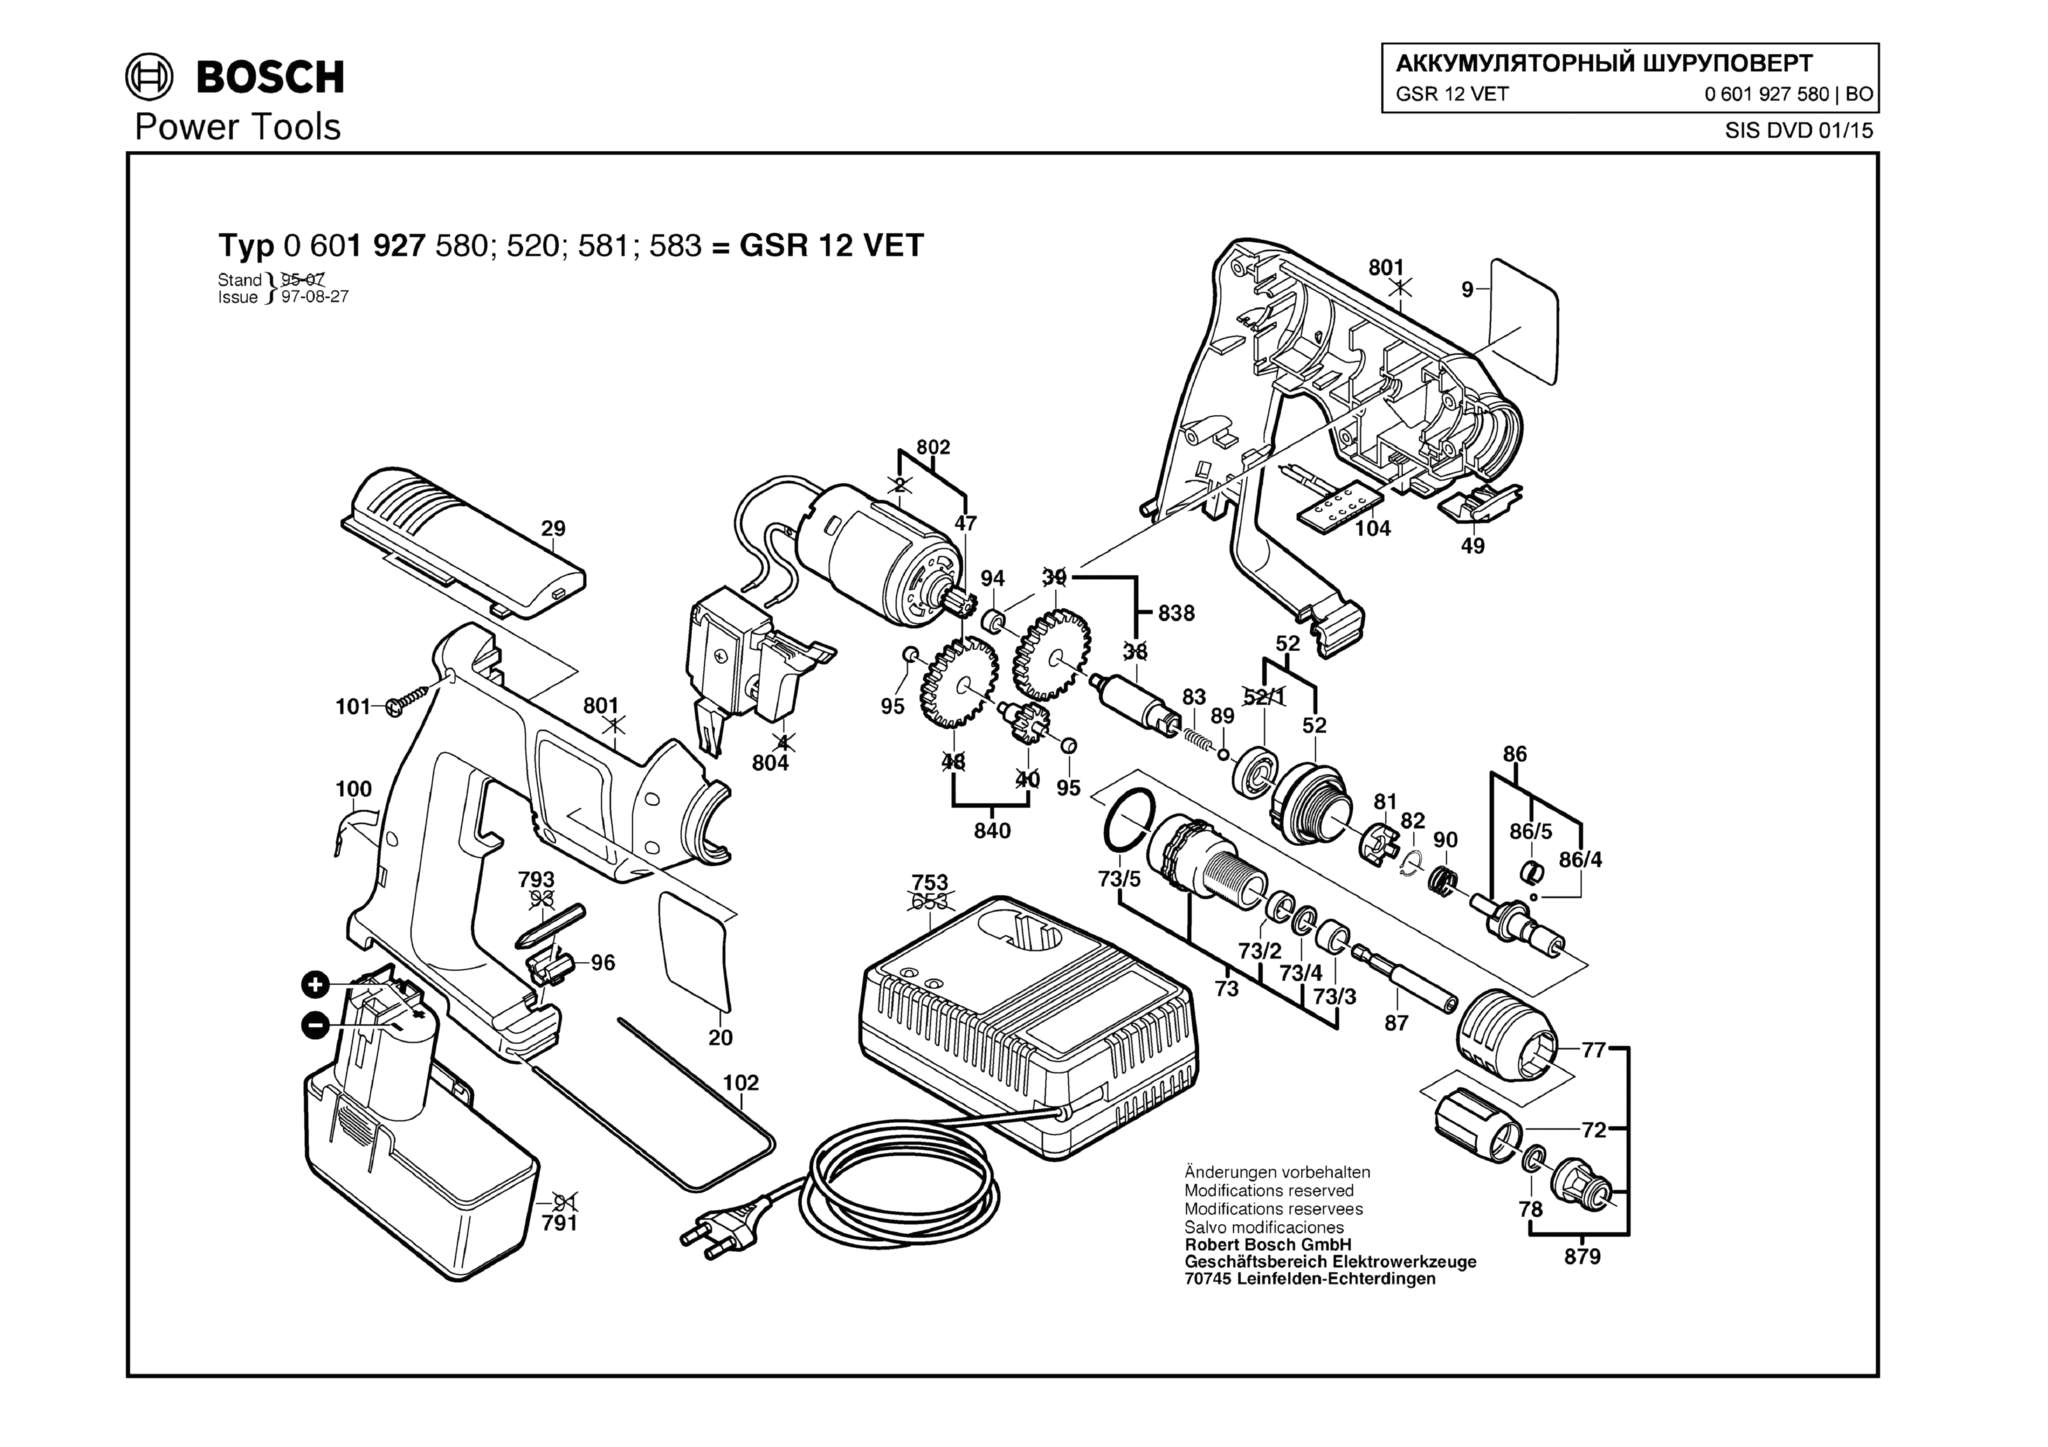 Запчасти, схема и деталировка Bosch GSR 12 VET (ТИП 0601927580)